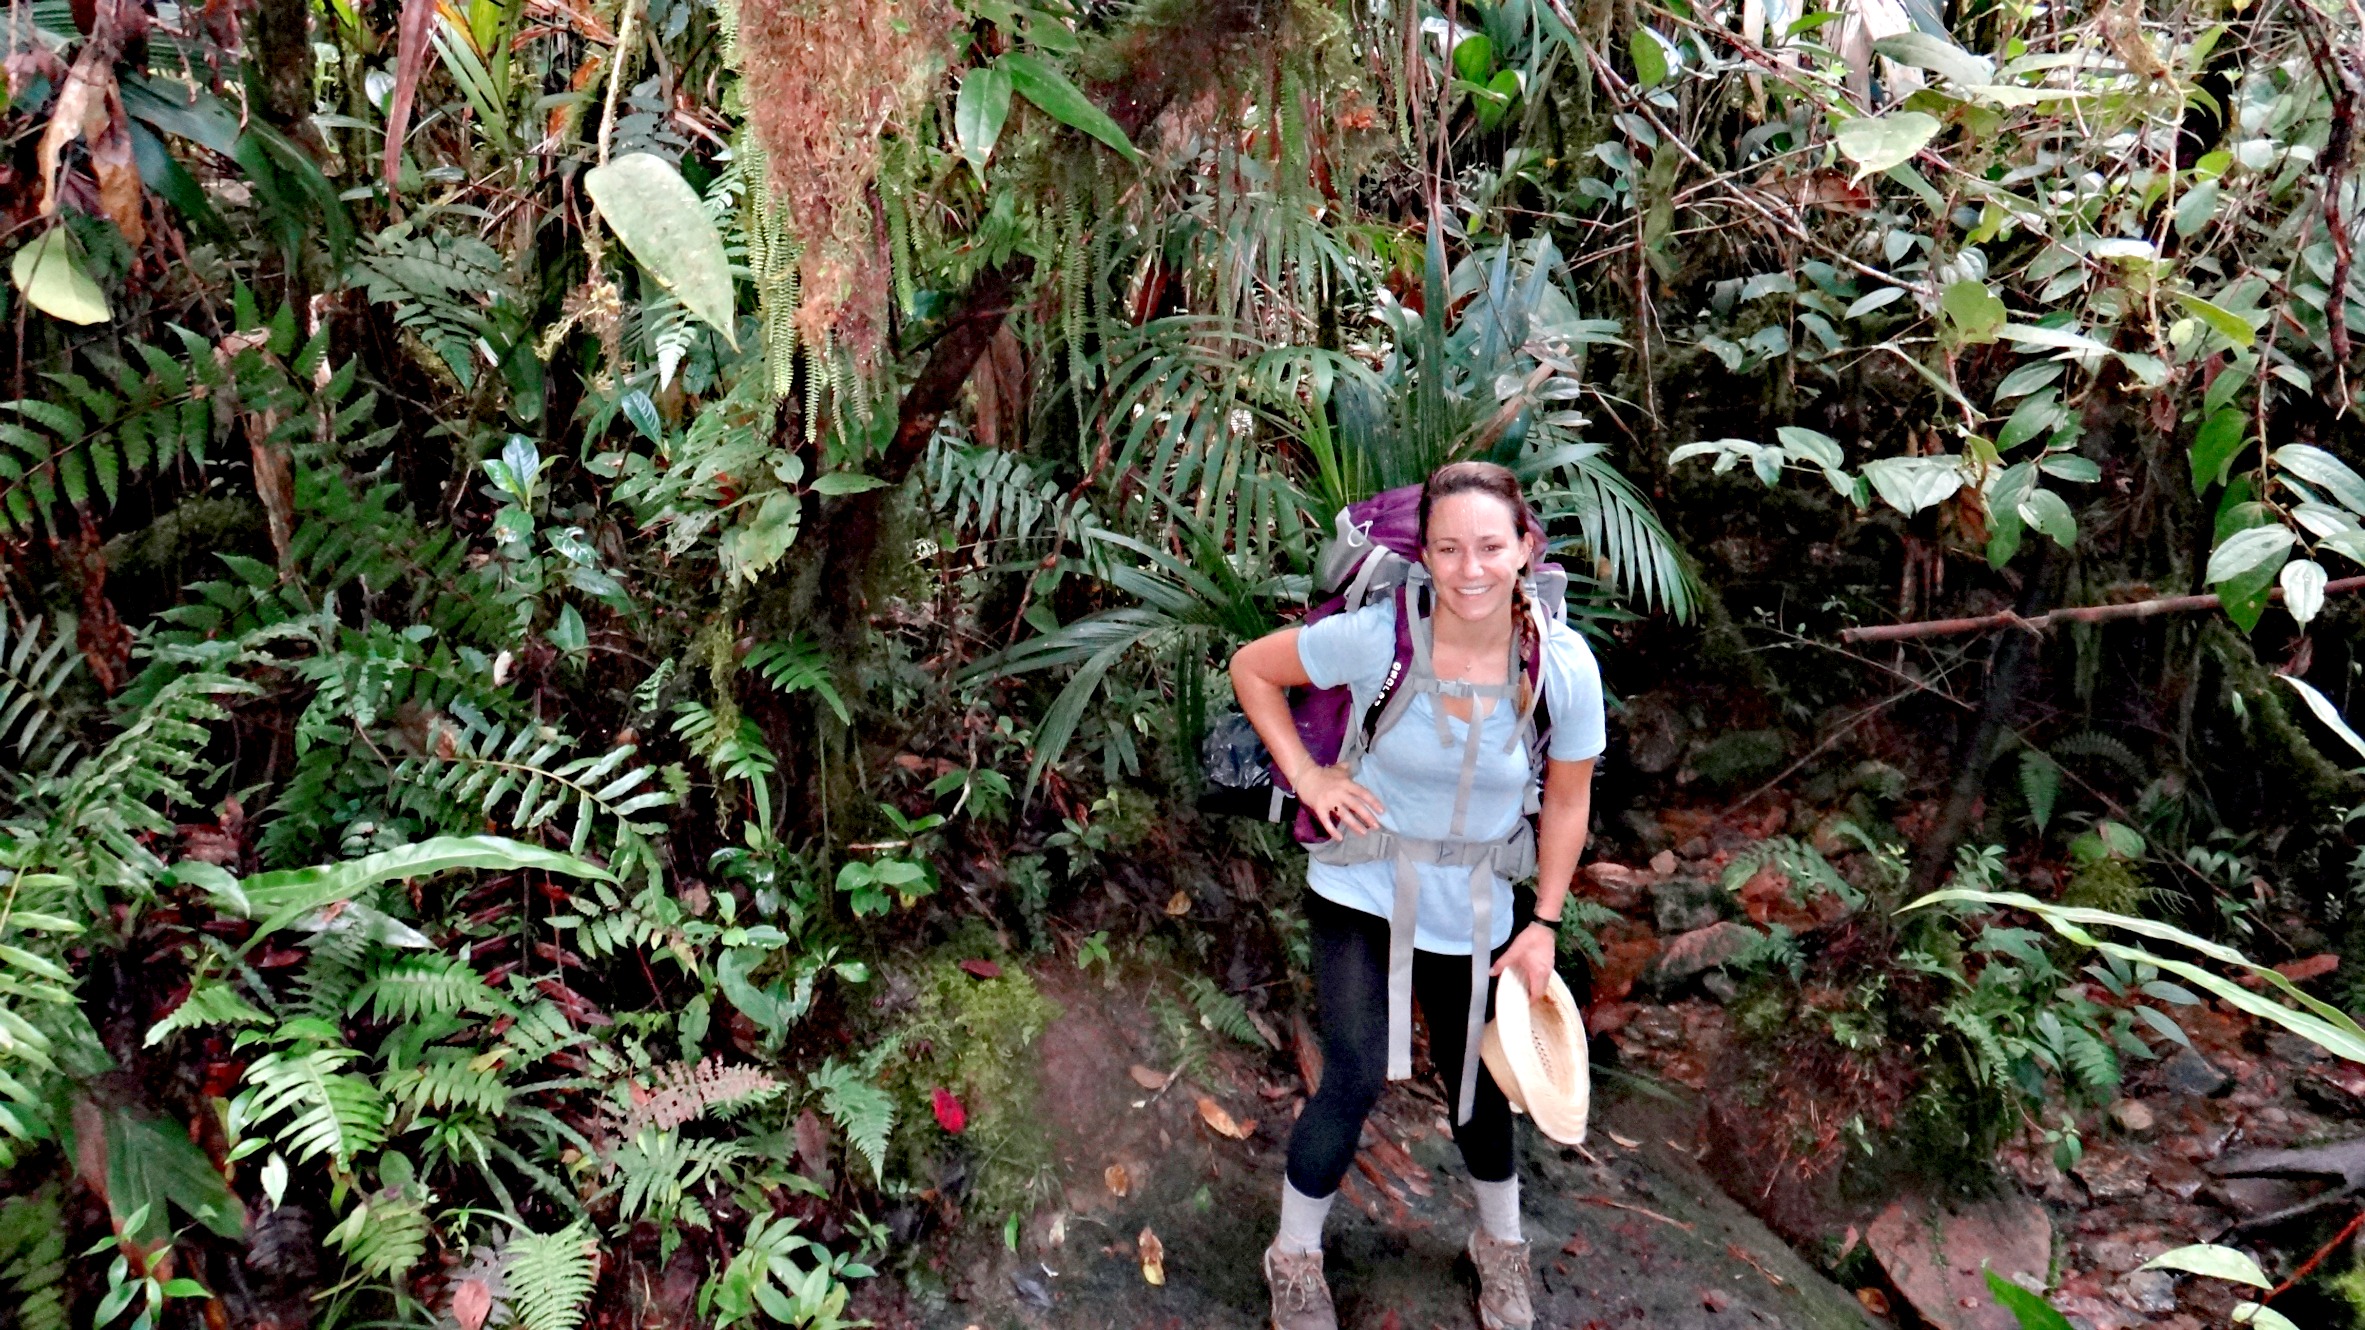 Hiking through the jungle of Mount Roraima